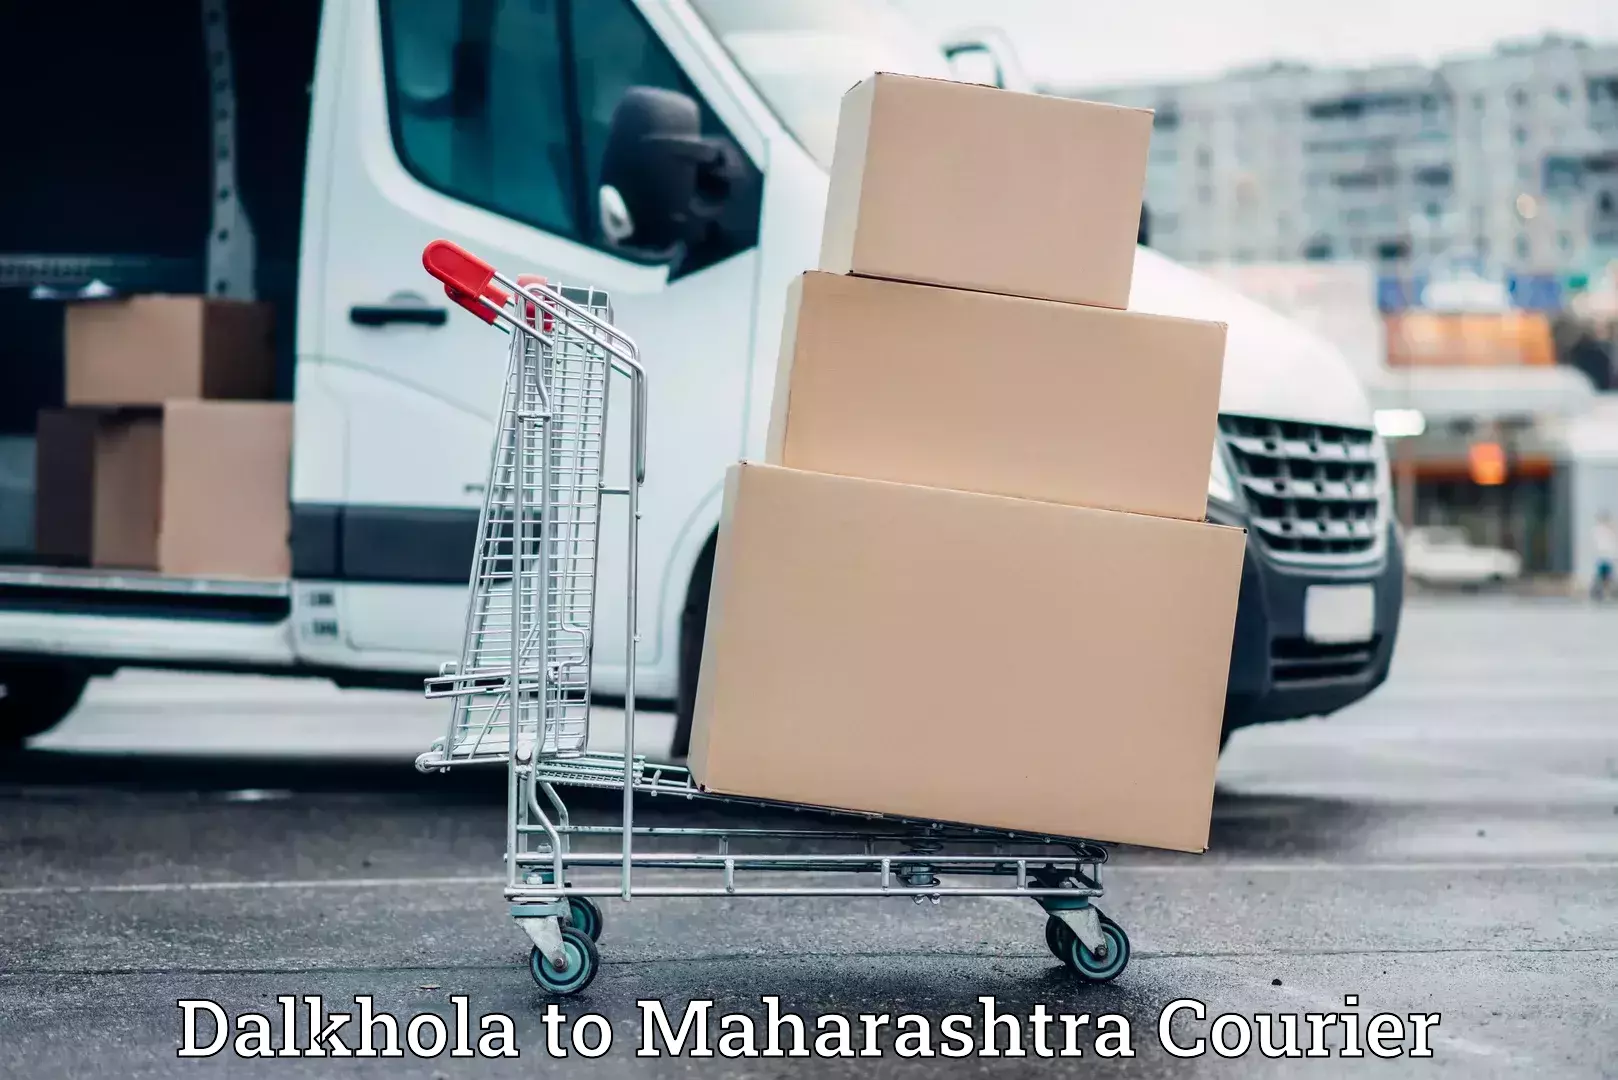 Expert moving and storage in Dalkhola to Maharashtra